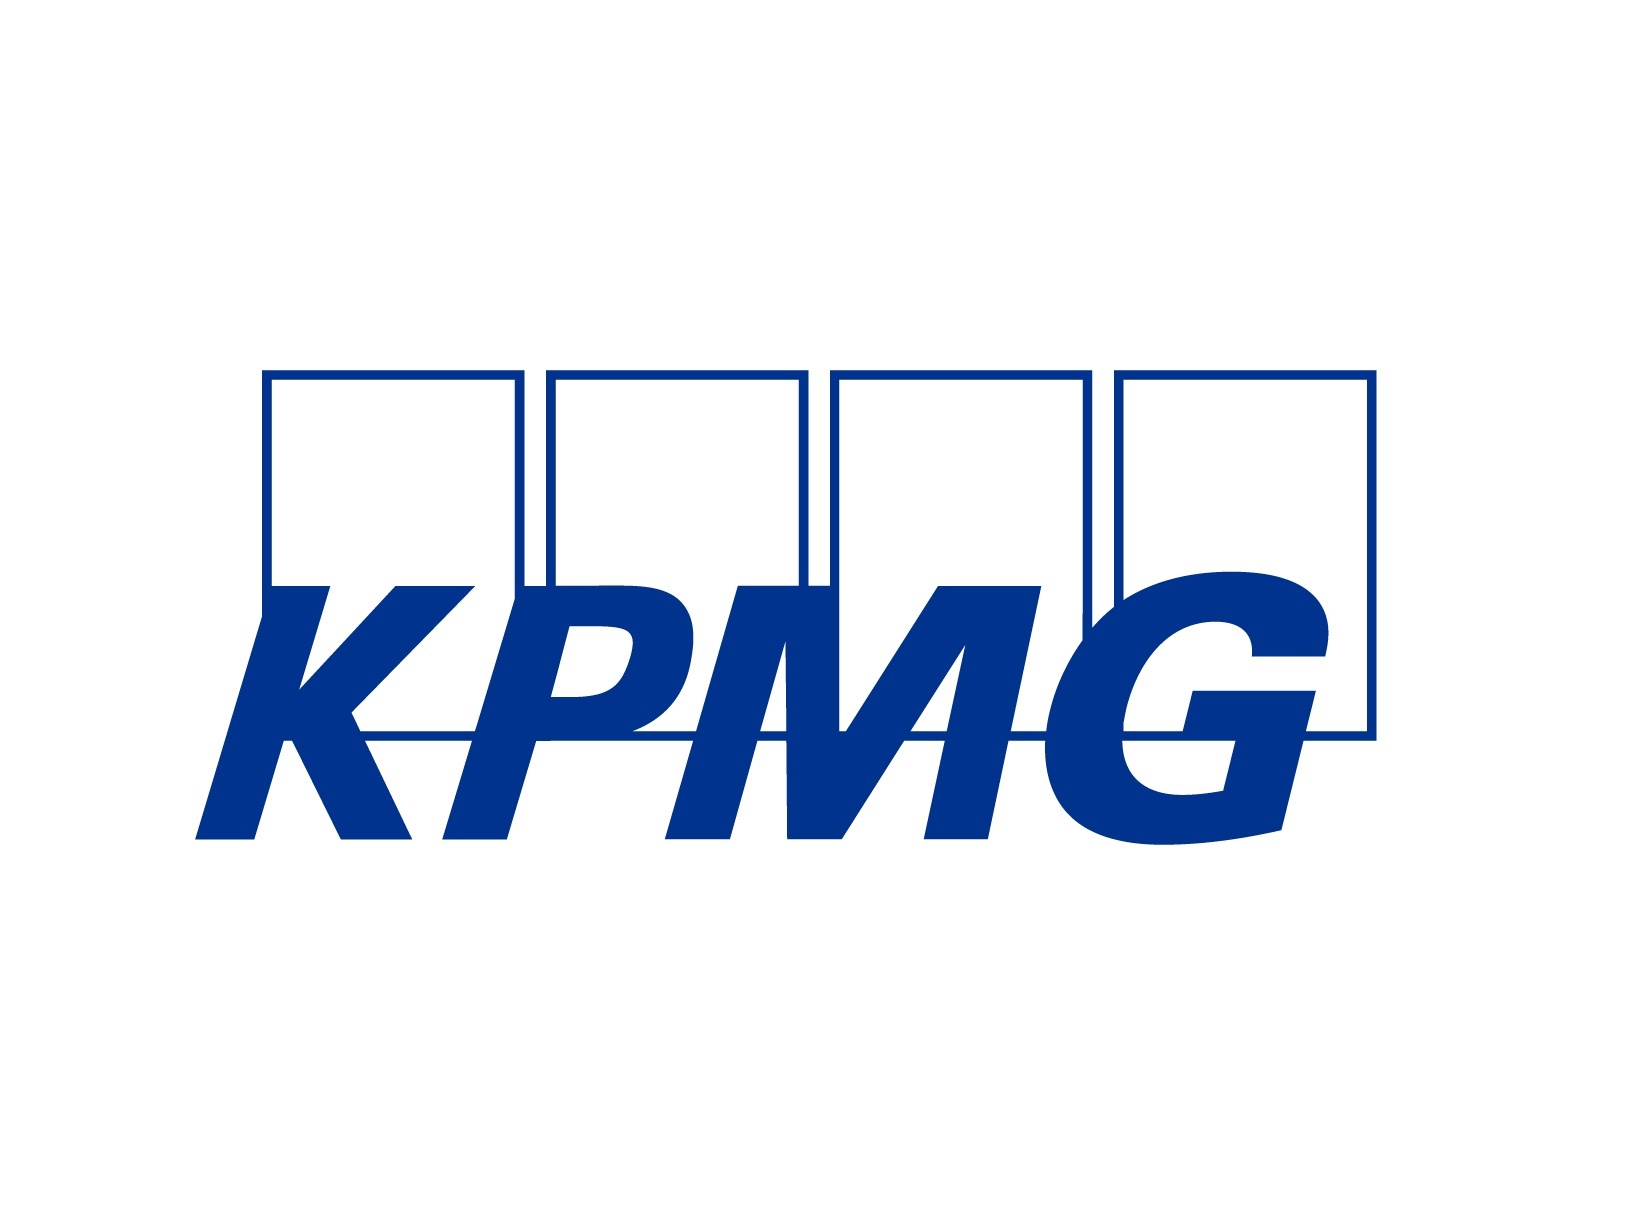 Hauptsponsor KPMG